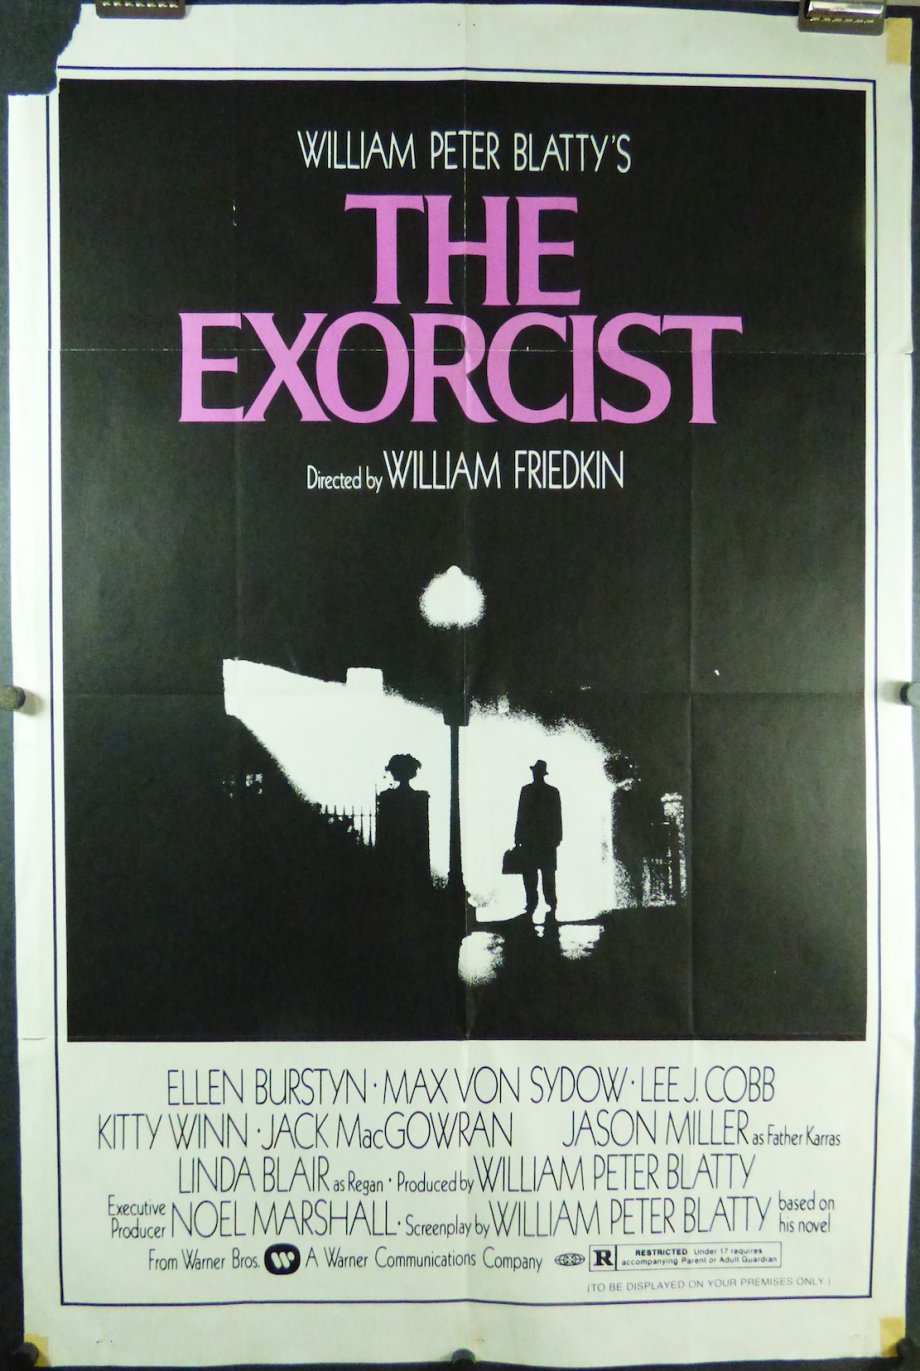 #9 The Exorcist (1973), Original Gross: $232,906,145, Gross Adjusted for 2017: $977 Million.